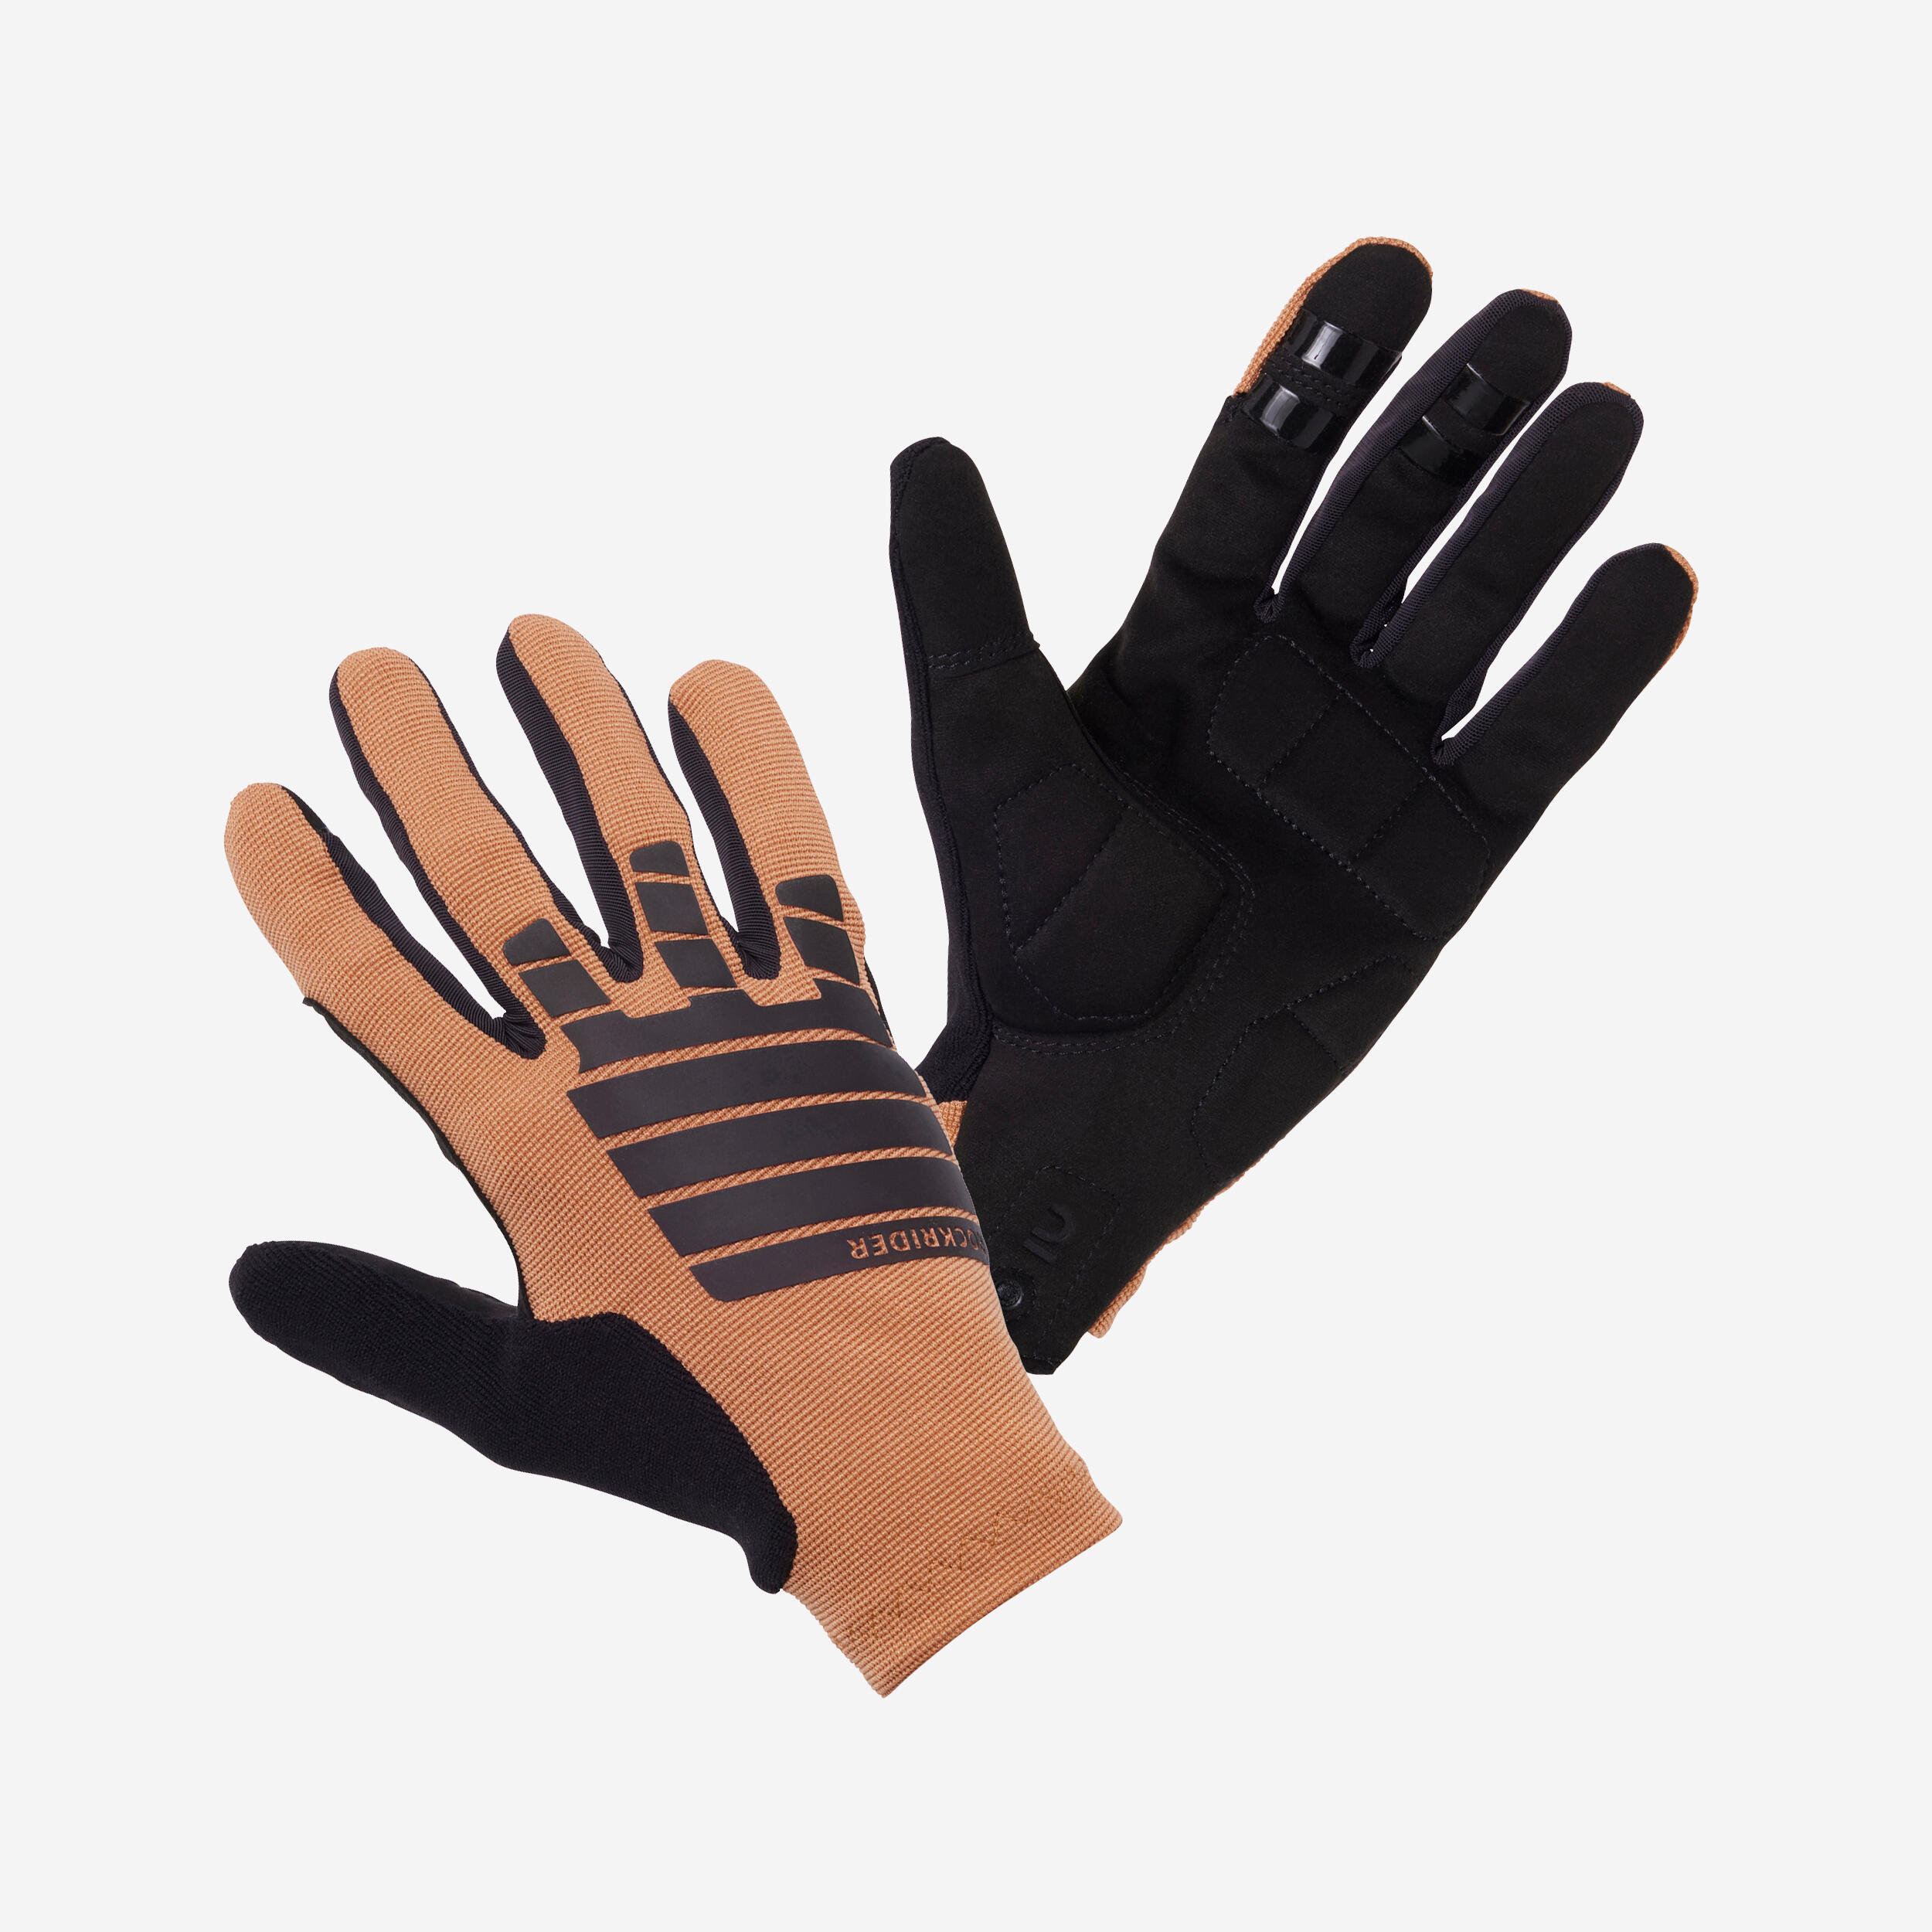 ROCKRIDER Mountain Bike Gloves EXP 500